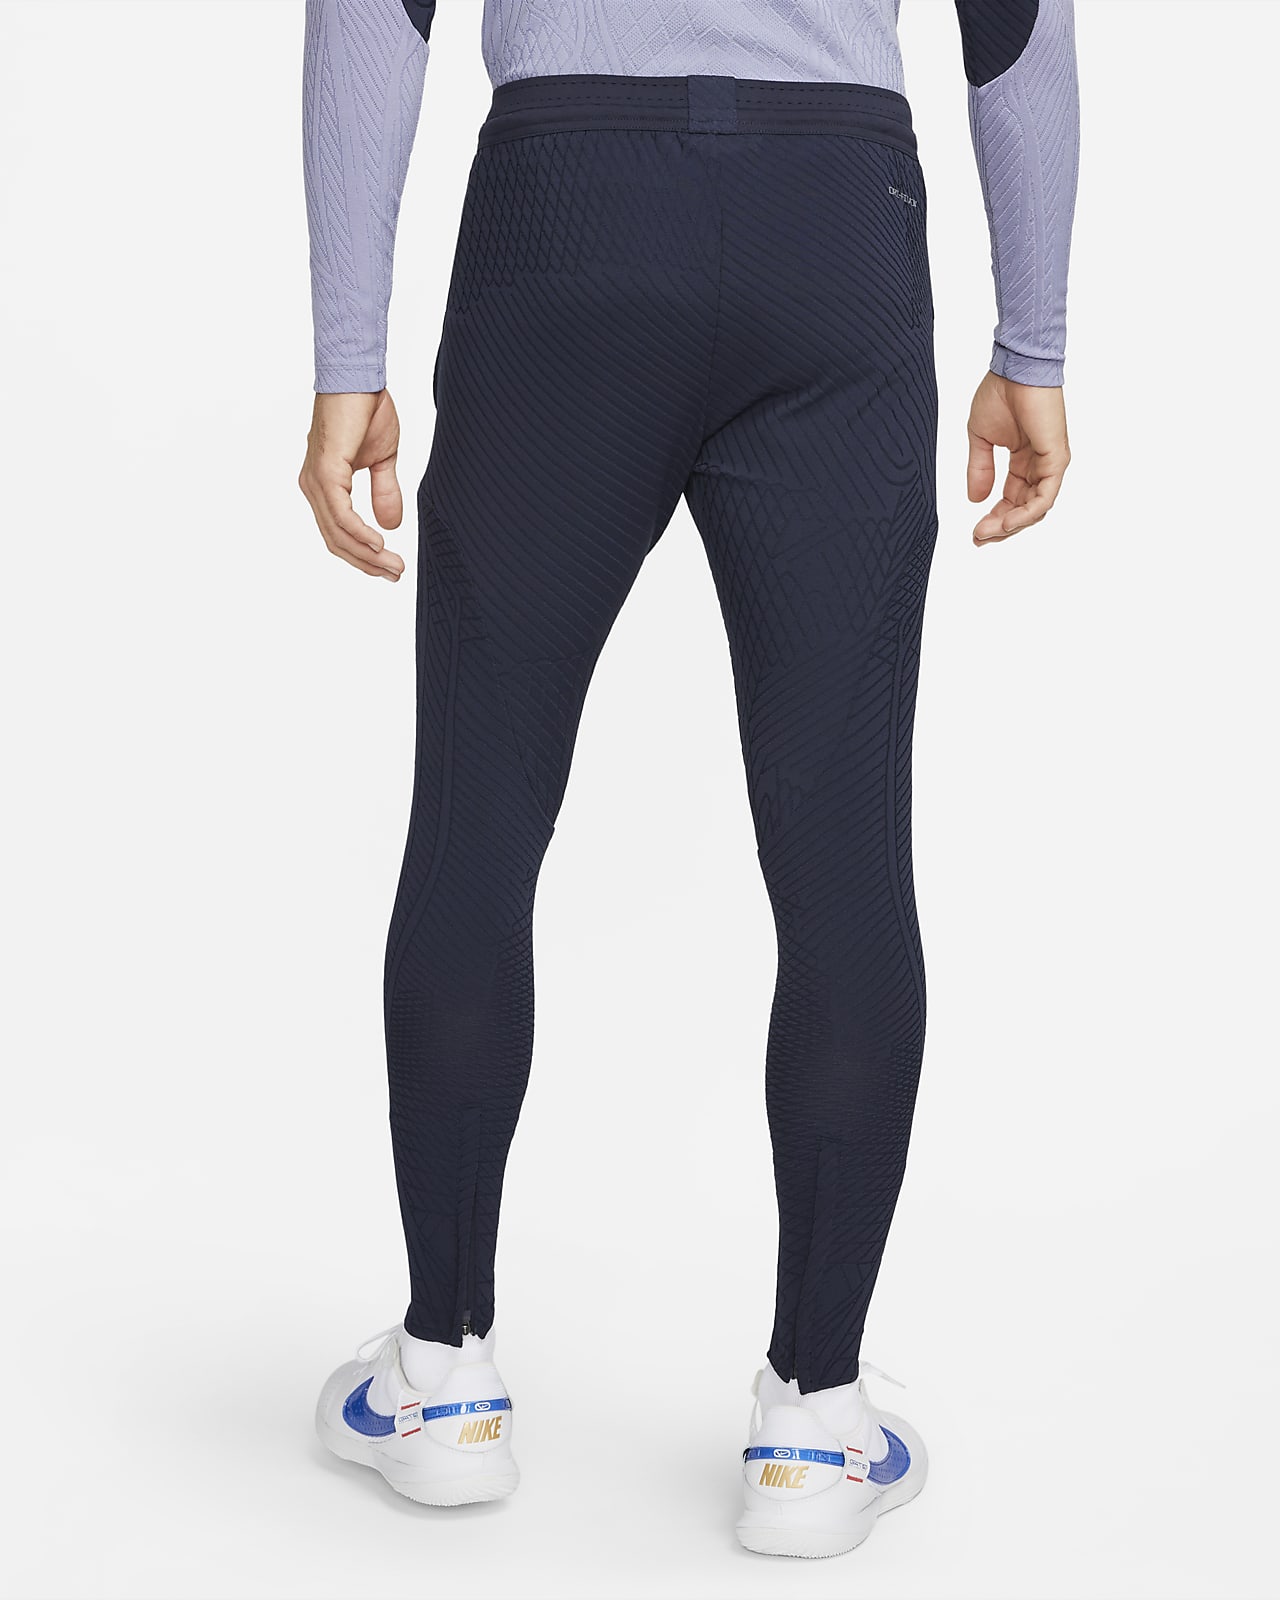 Football Trousers & Tights. Academy & Strike Pants. Nike CA